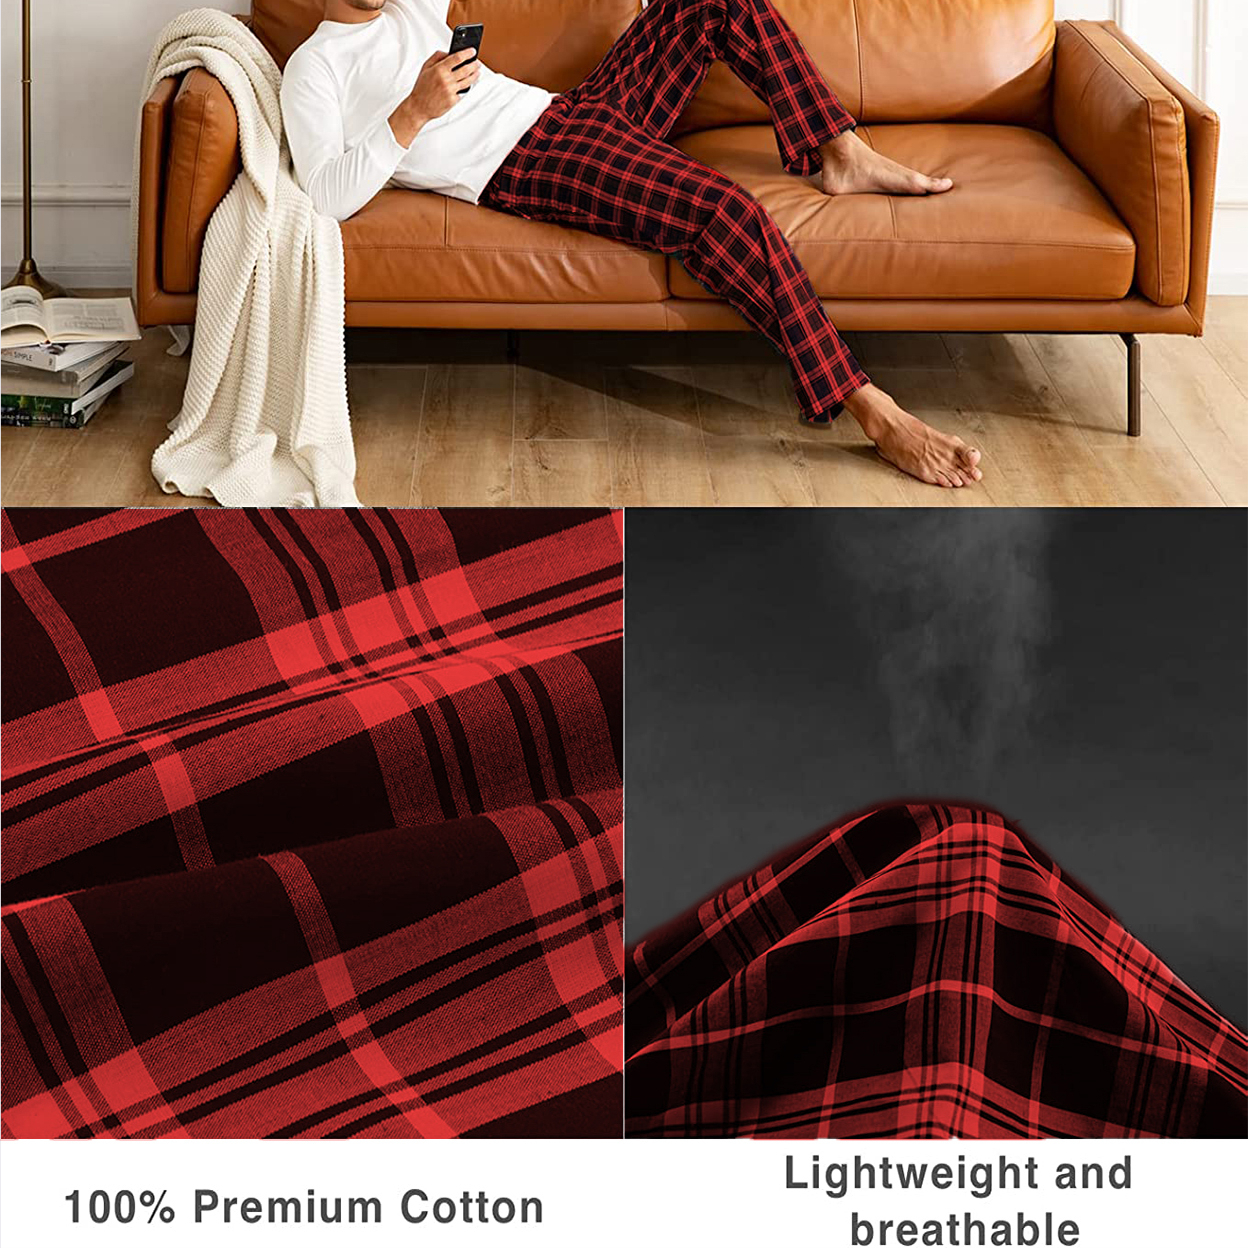 3-Pack: Men's Soft 100% Cotton Flannel Plaid Lounge Pajama Sleep Pants - Medium